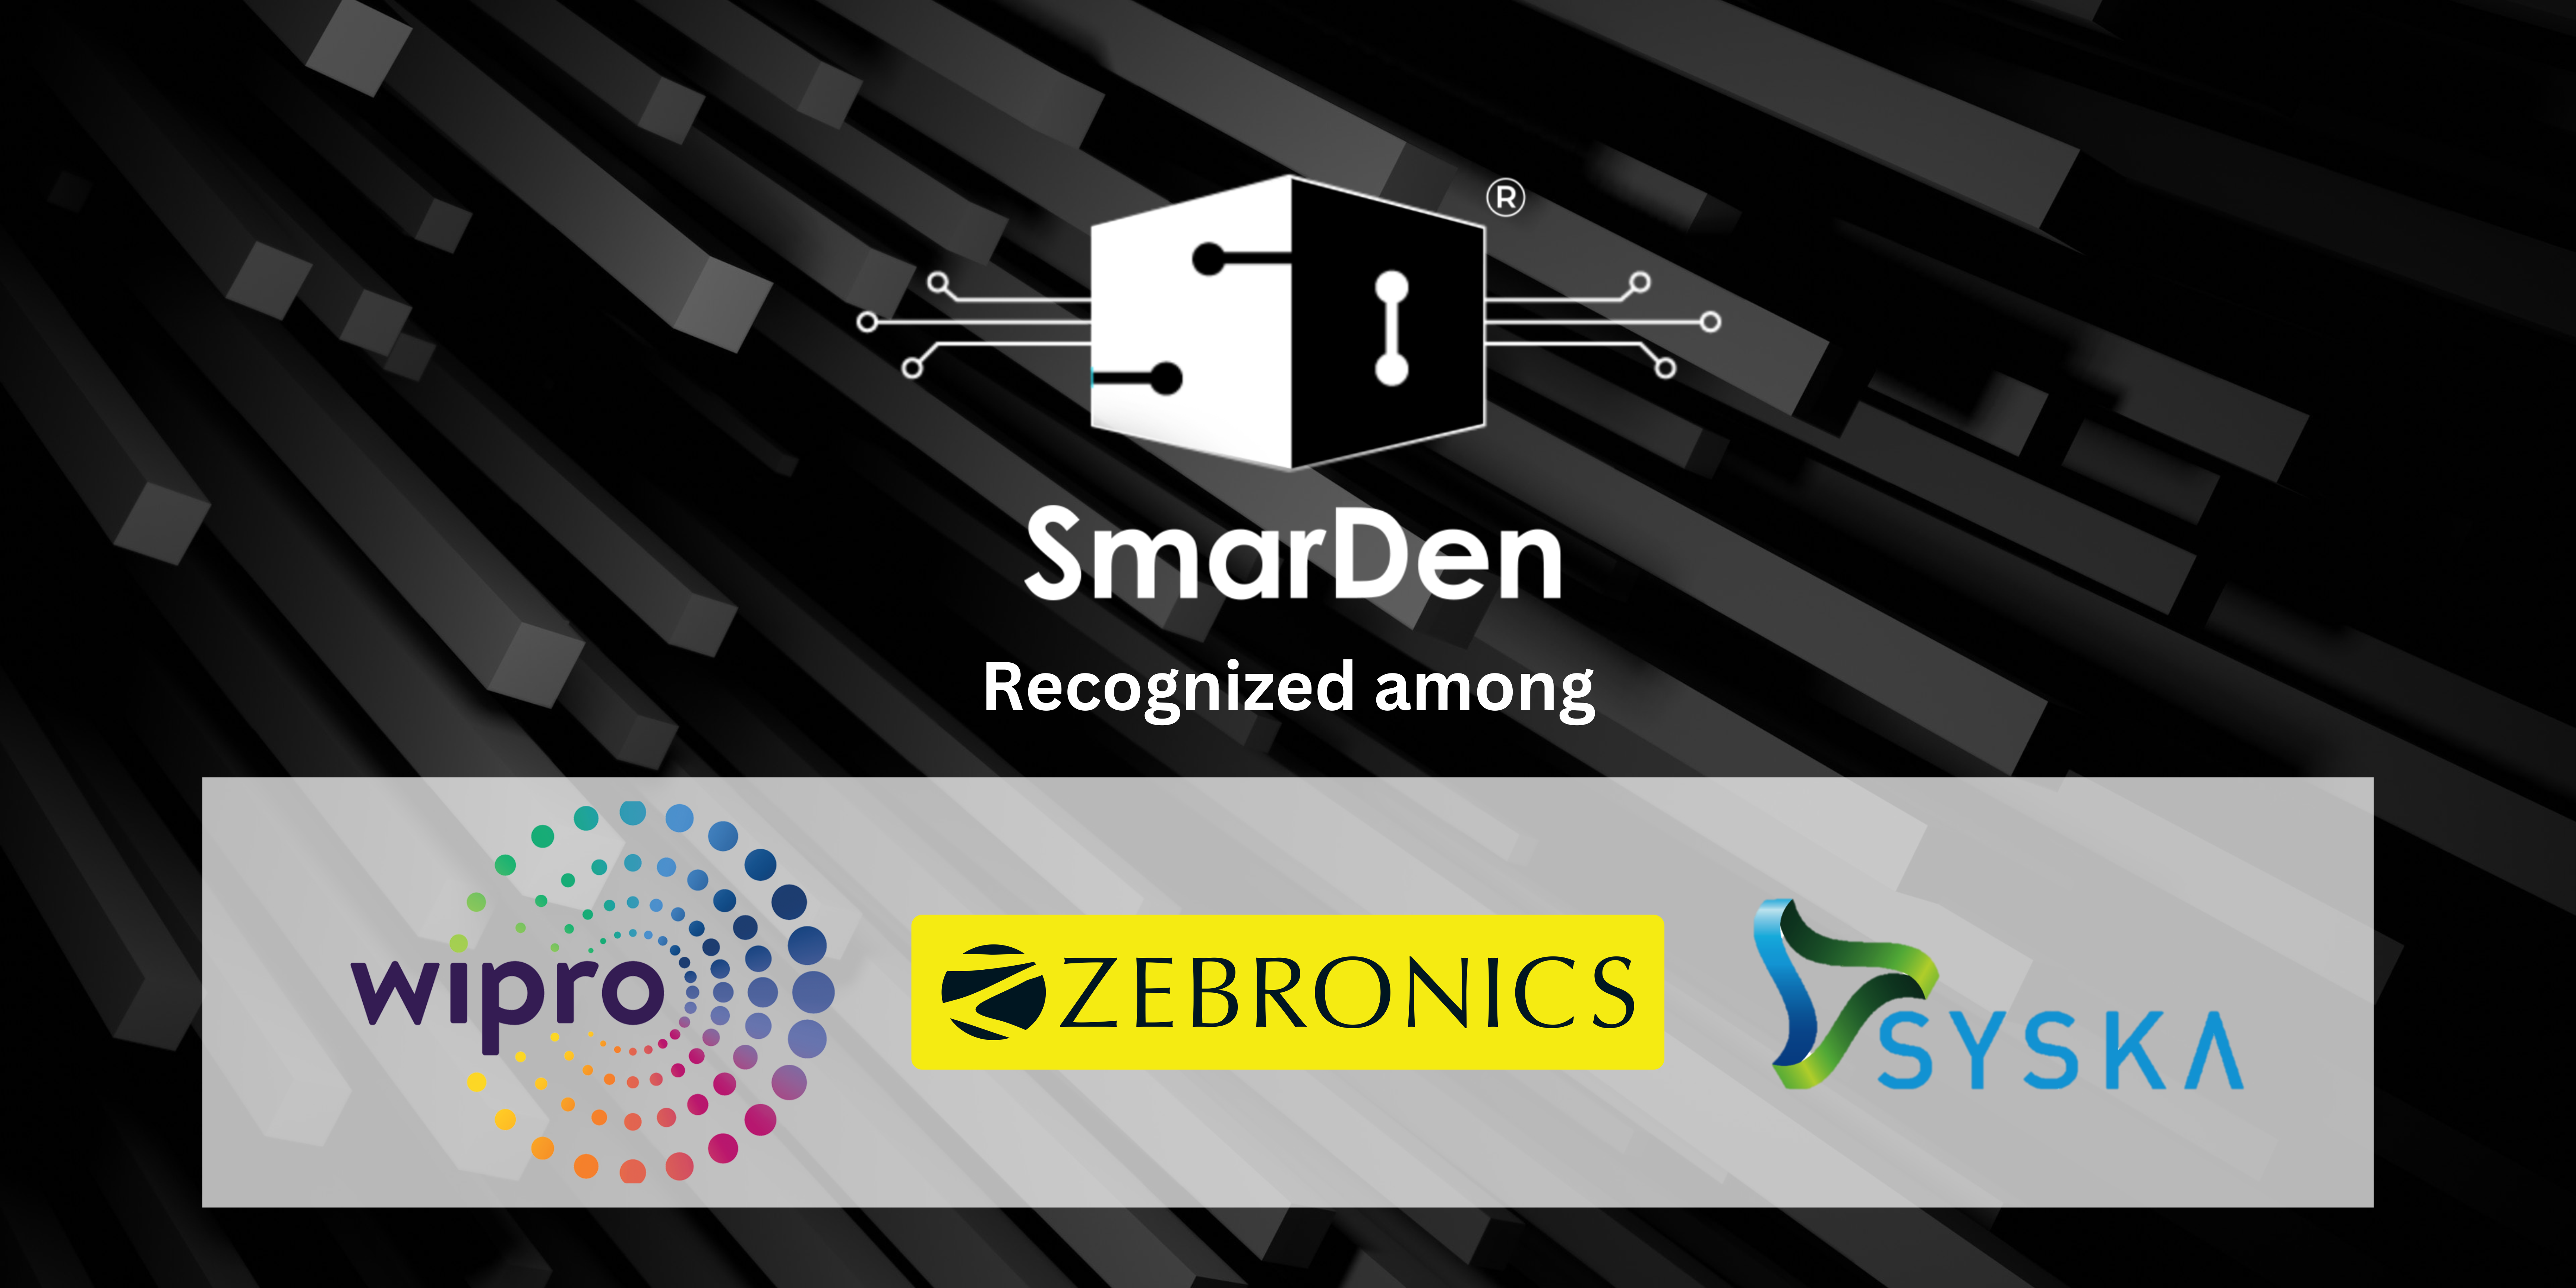 Smarden recognized among companies like Wipro, Zebronics and Syska